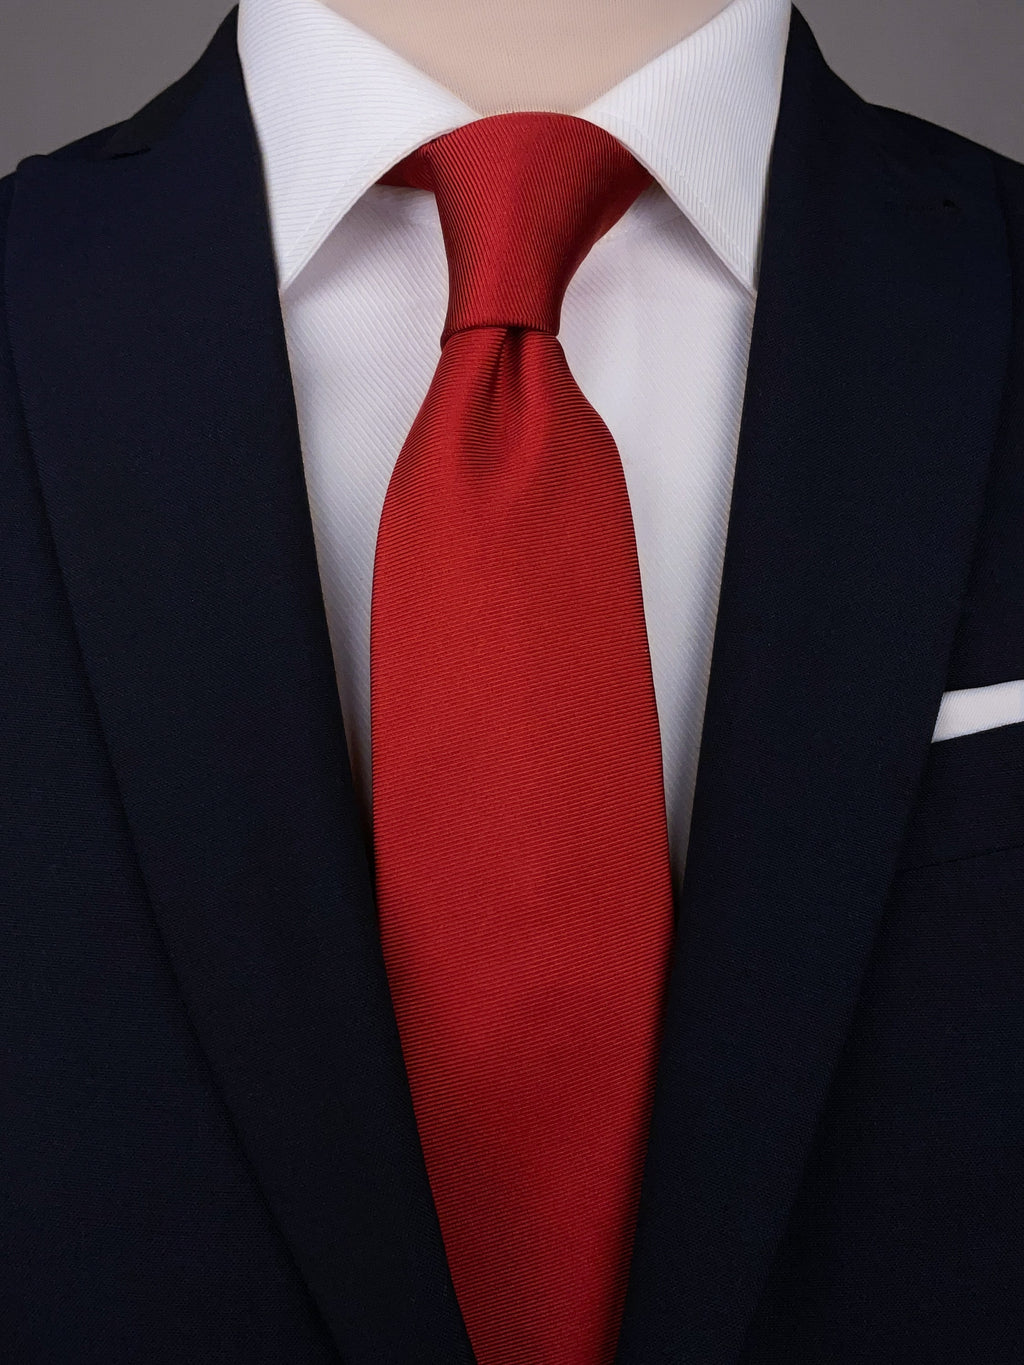 Valentine Red silk necktie worn with a white shirt and a navy blue suit